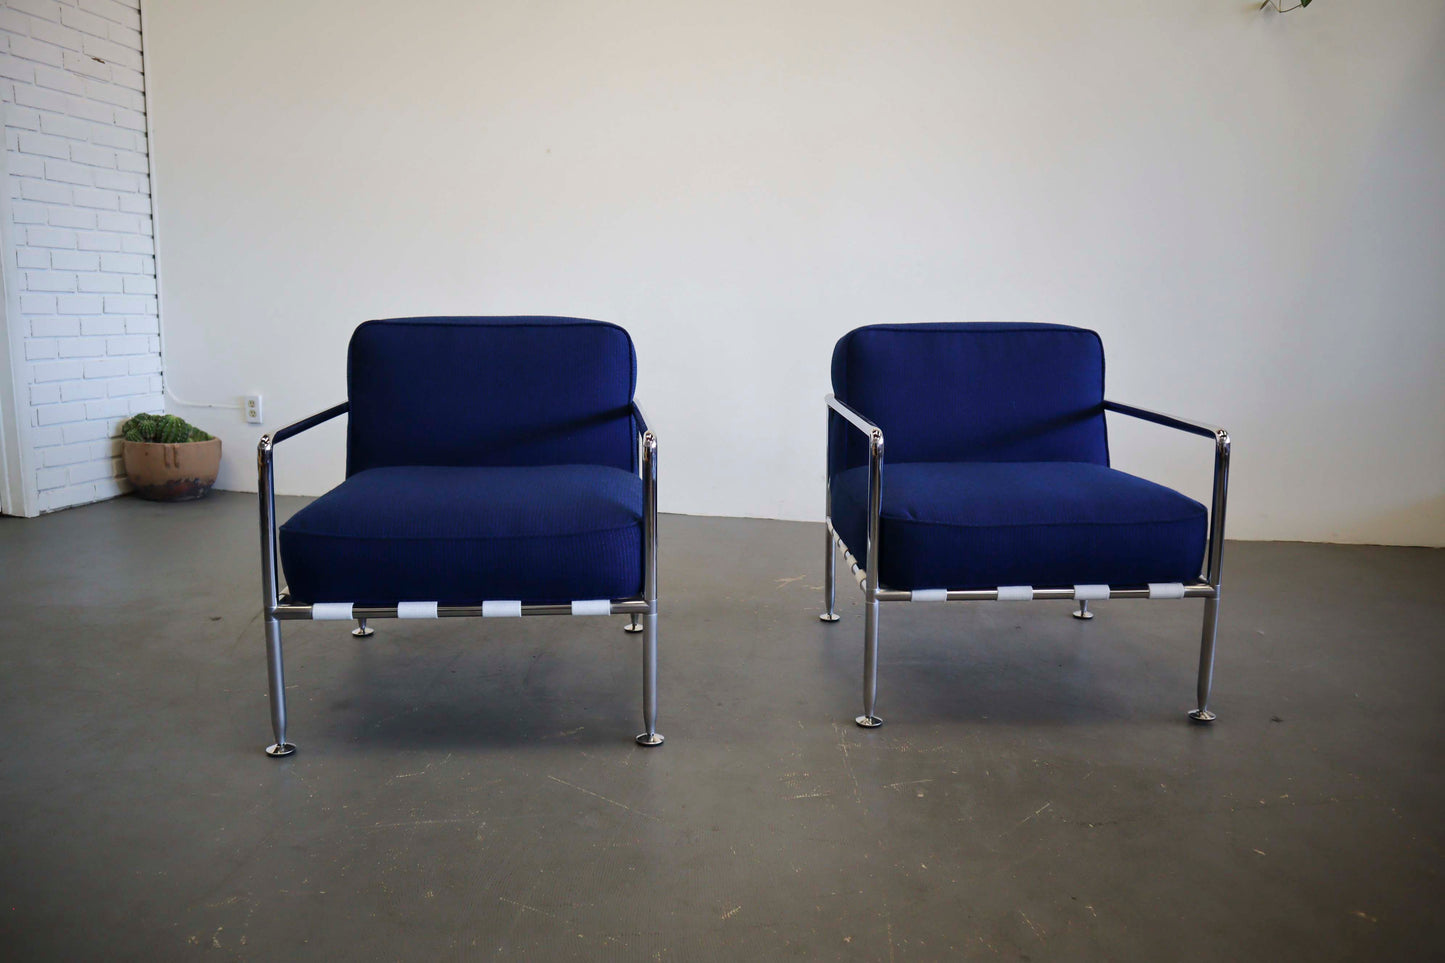 Antonio Citterio "Free Time" Lounge Chairs